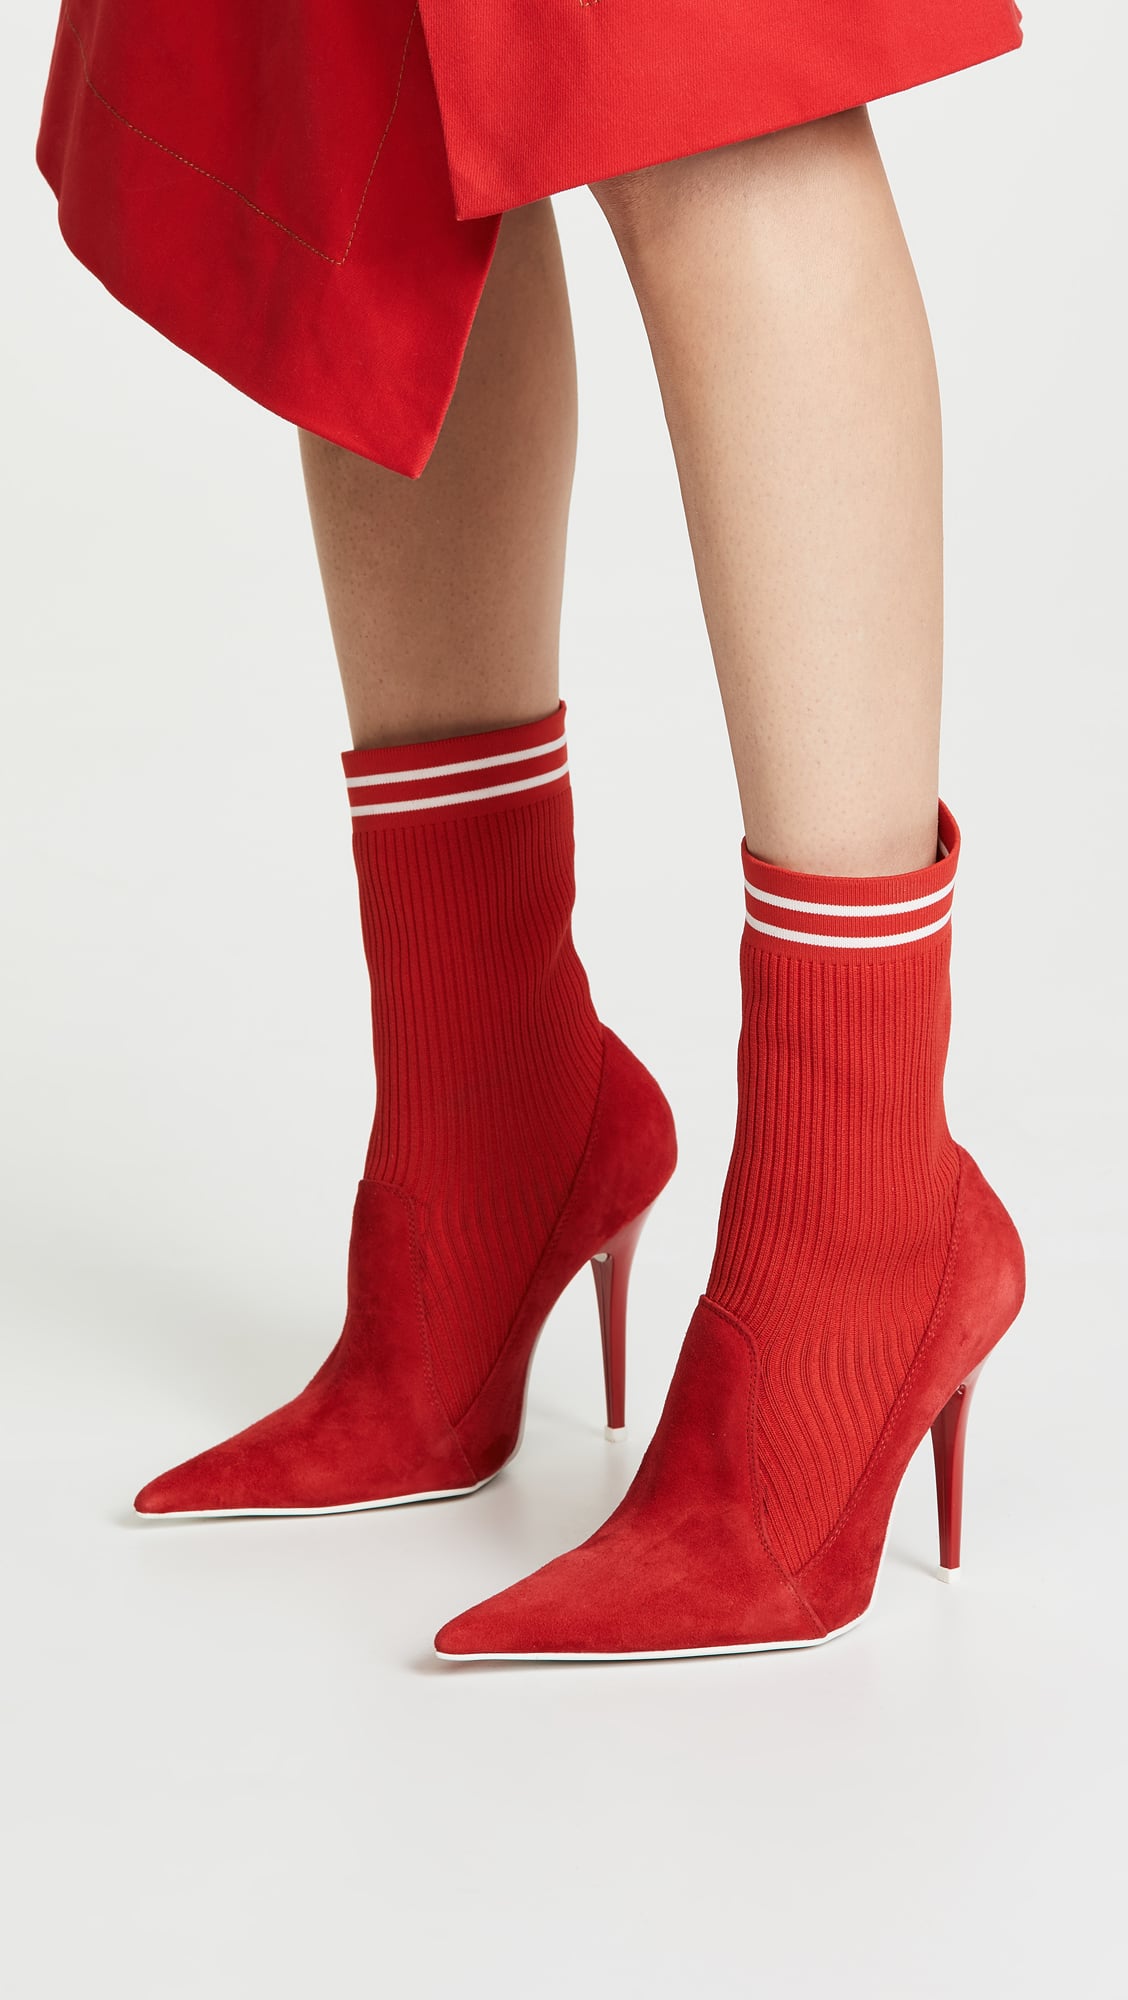 Gigi Hadid's Red Sock Boots